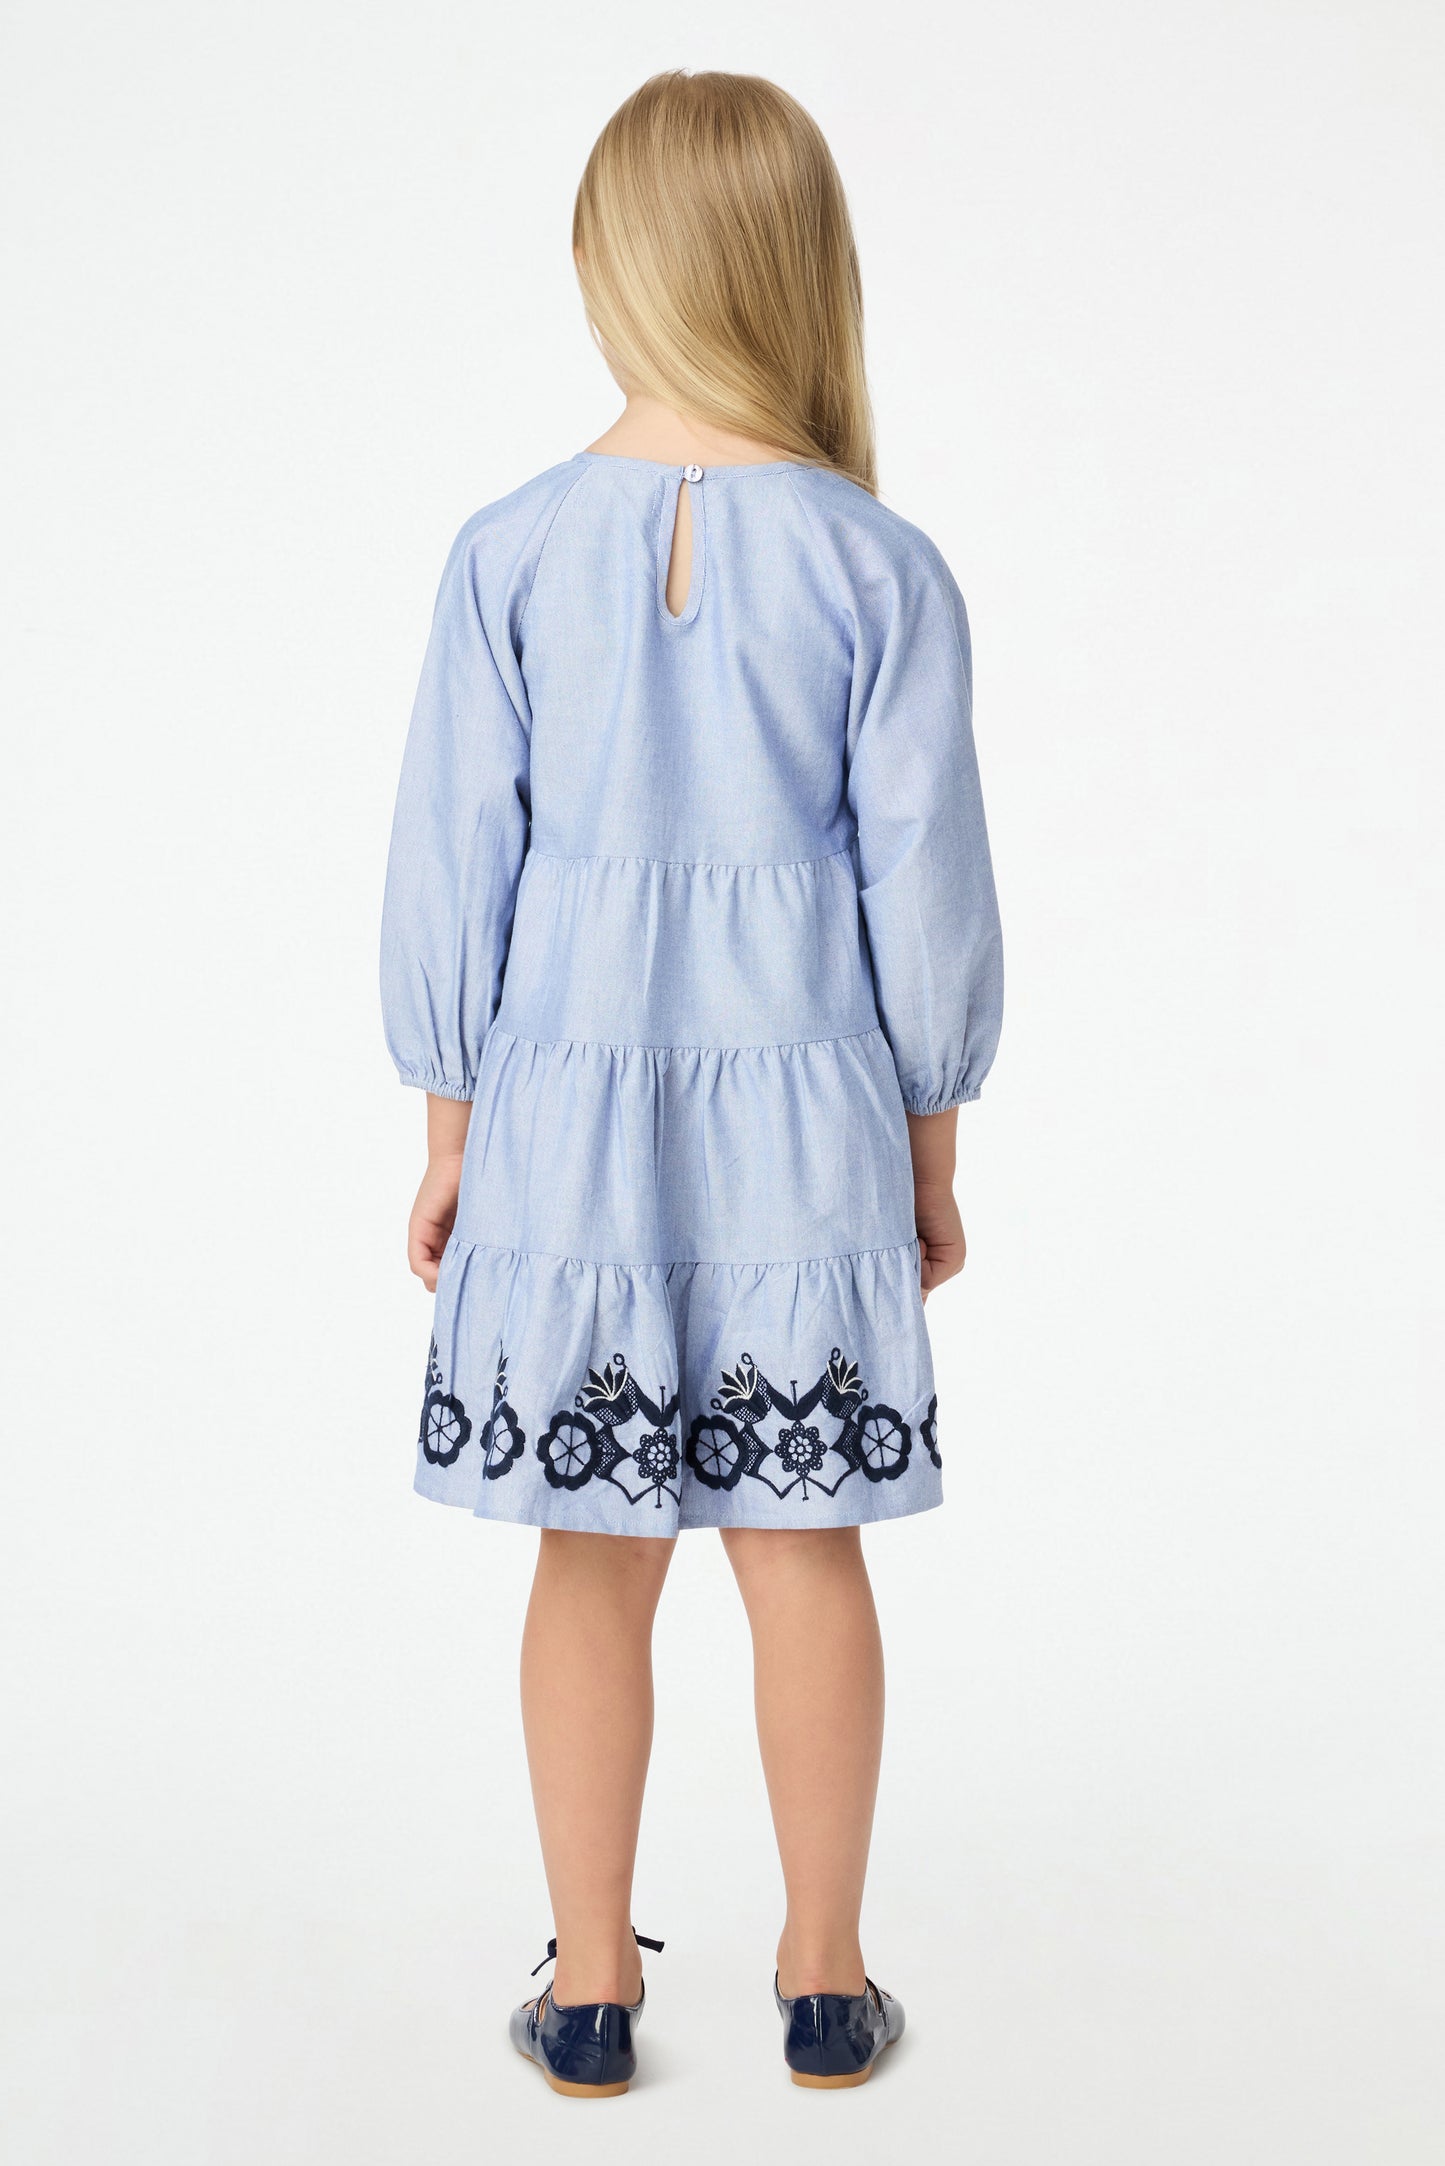 Roller Rabbit Kids Wynona Embroidery Priscilla Dress